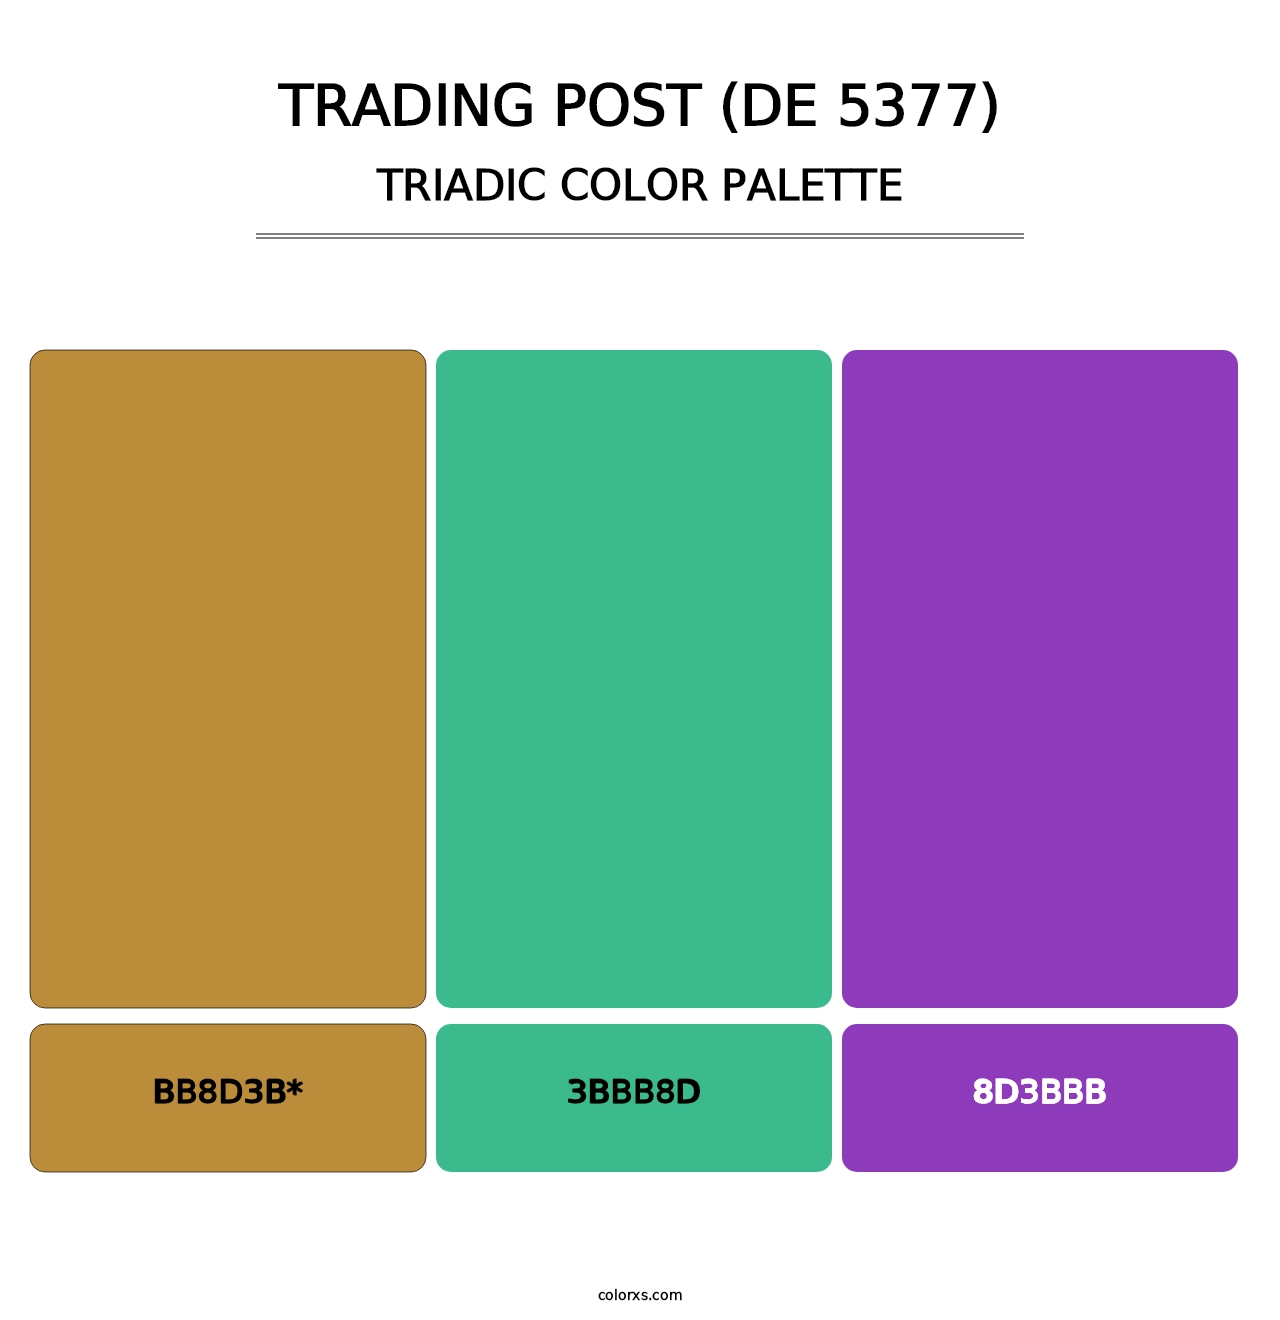 Trading Post (DE 5377) - Triadic Color Palette